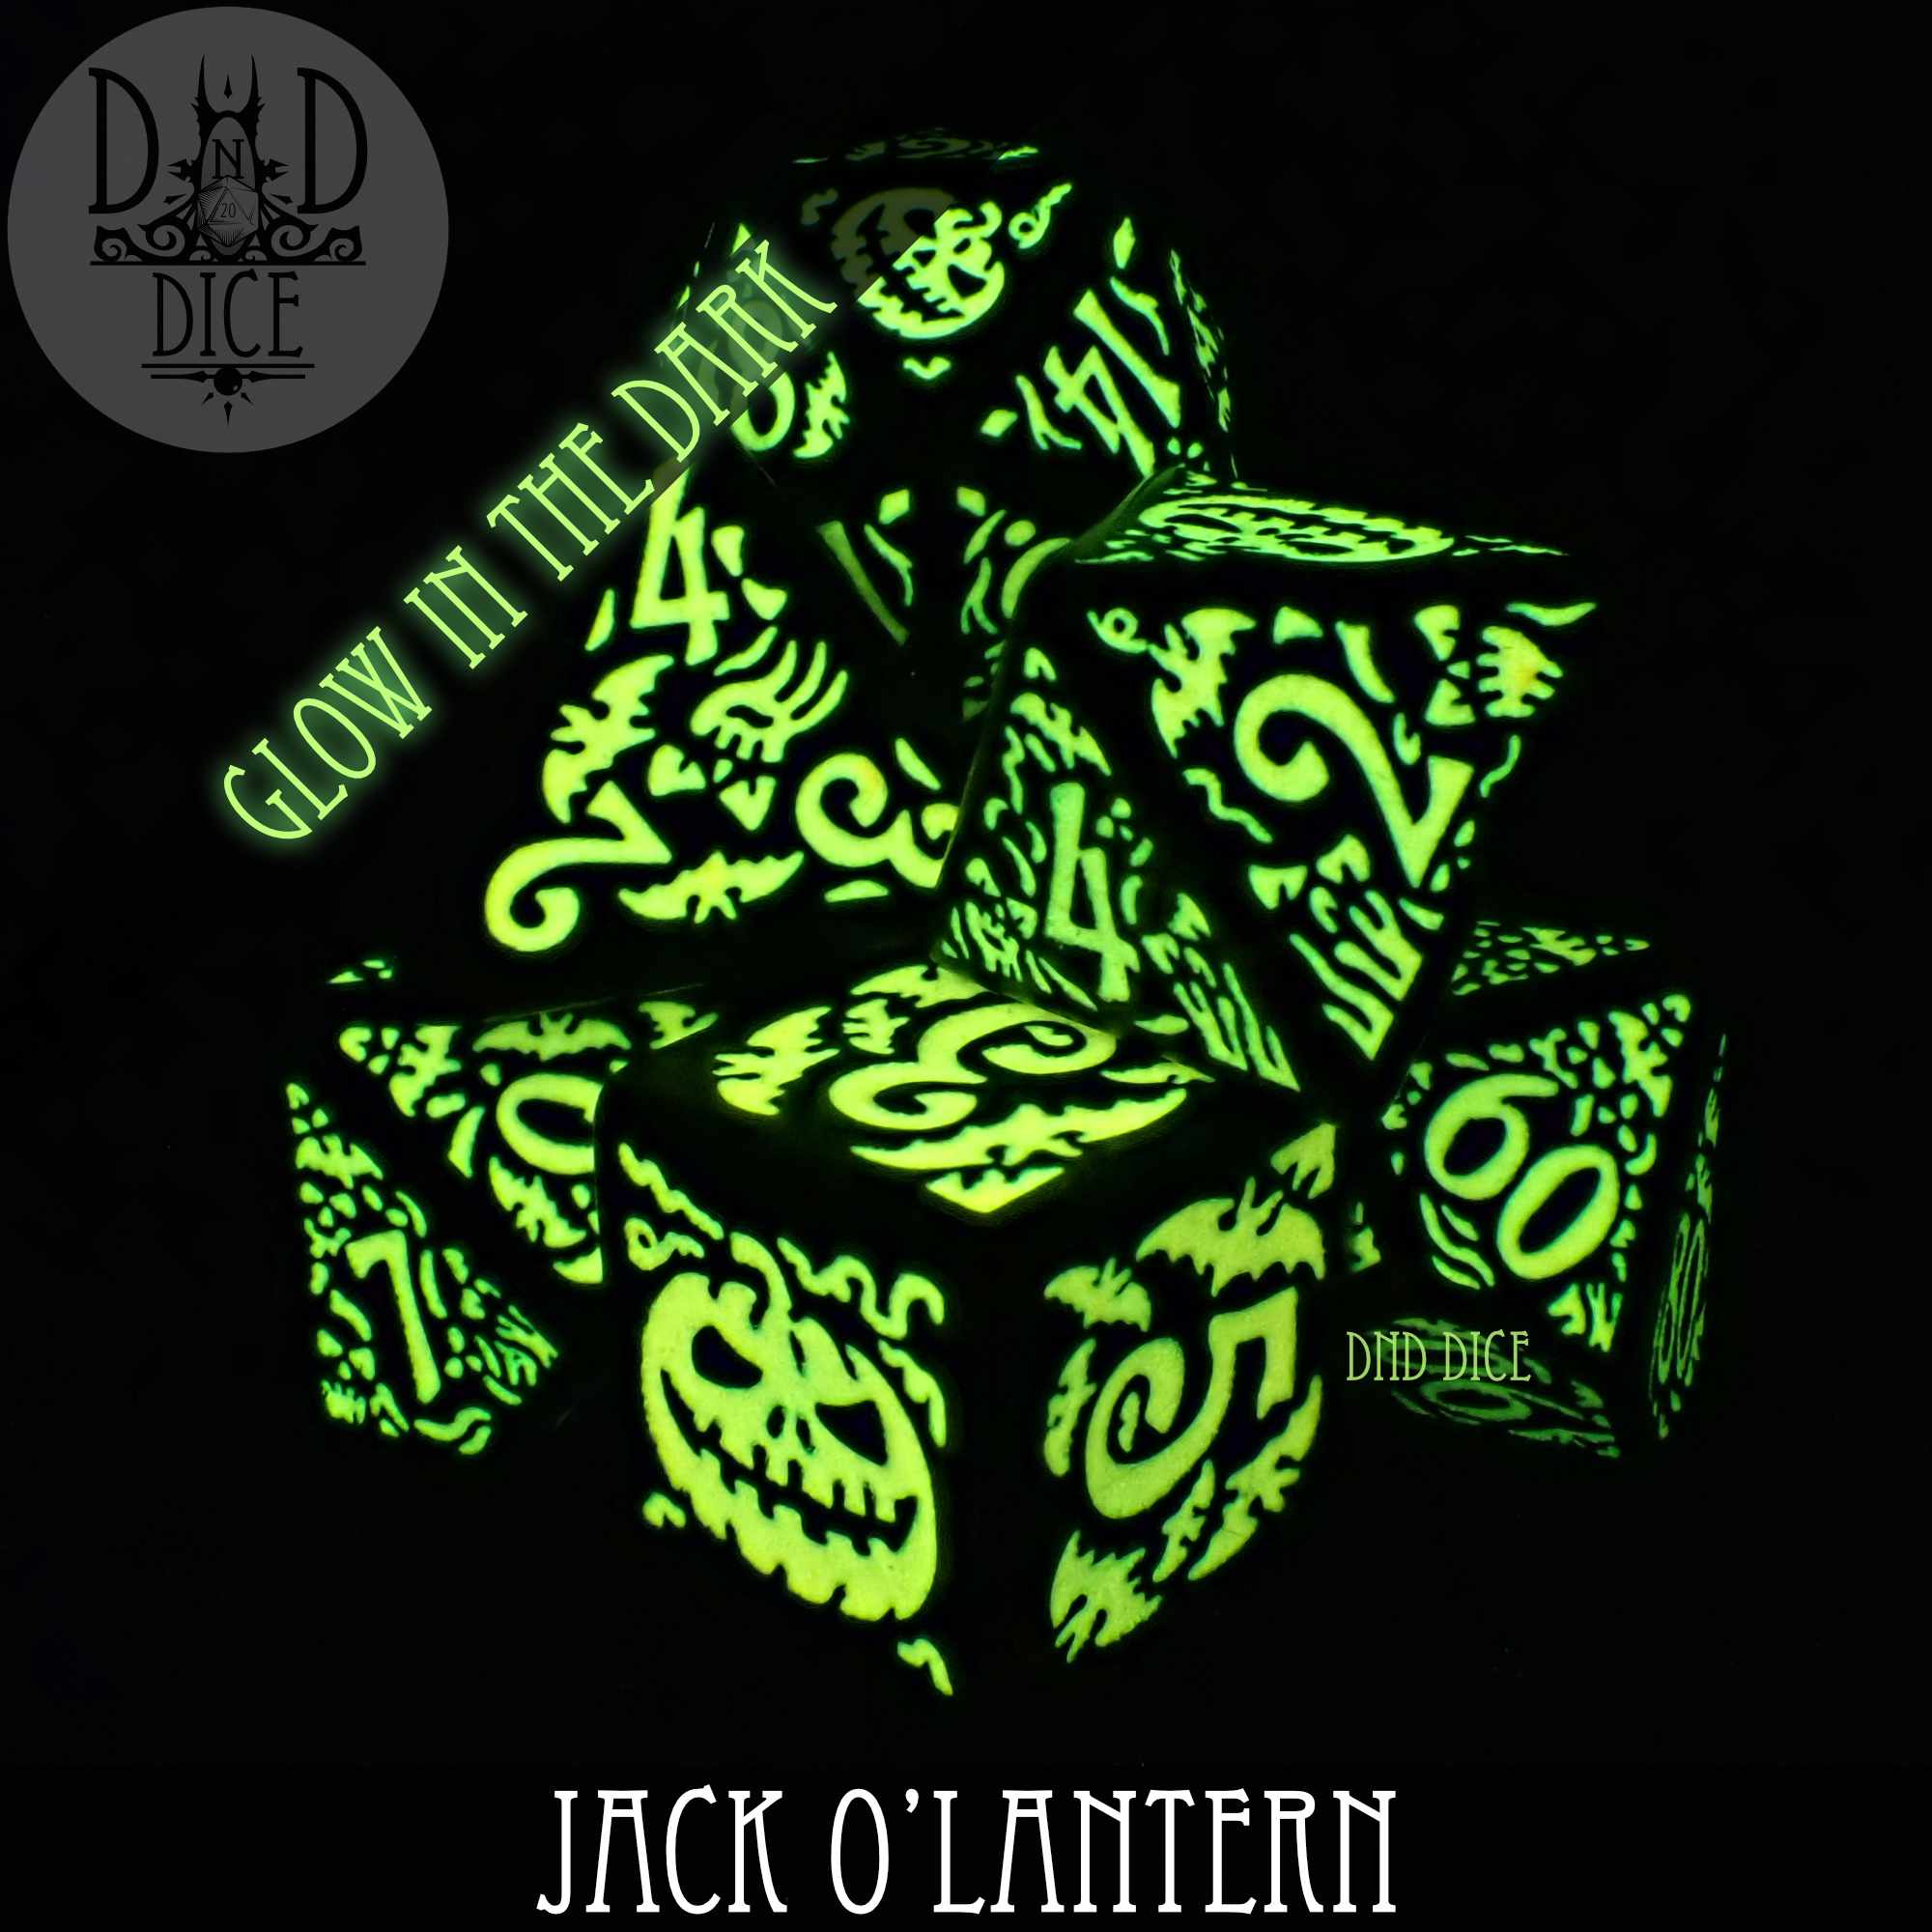 Jack O’Lantern Glow in the Dark Dice Set